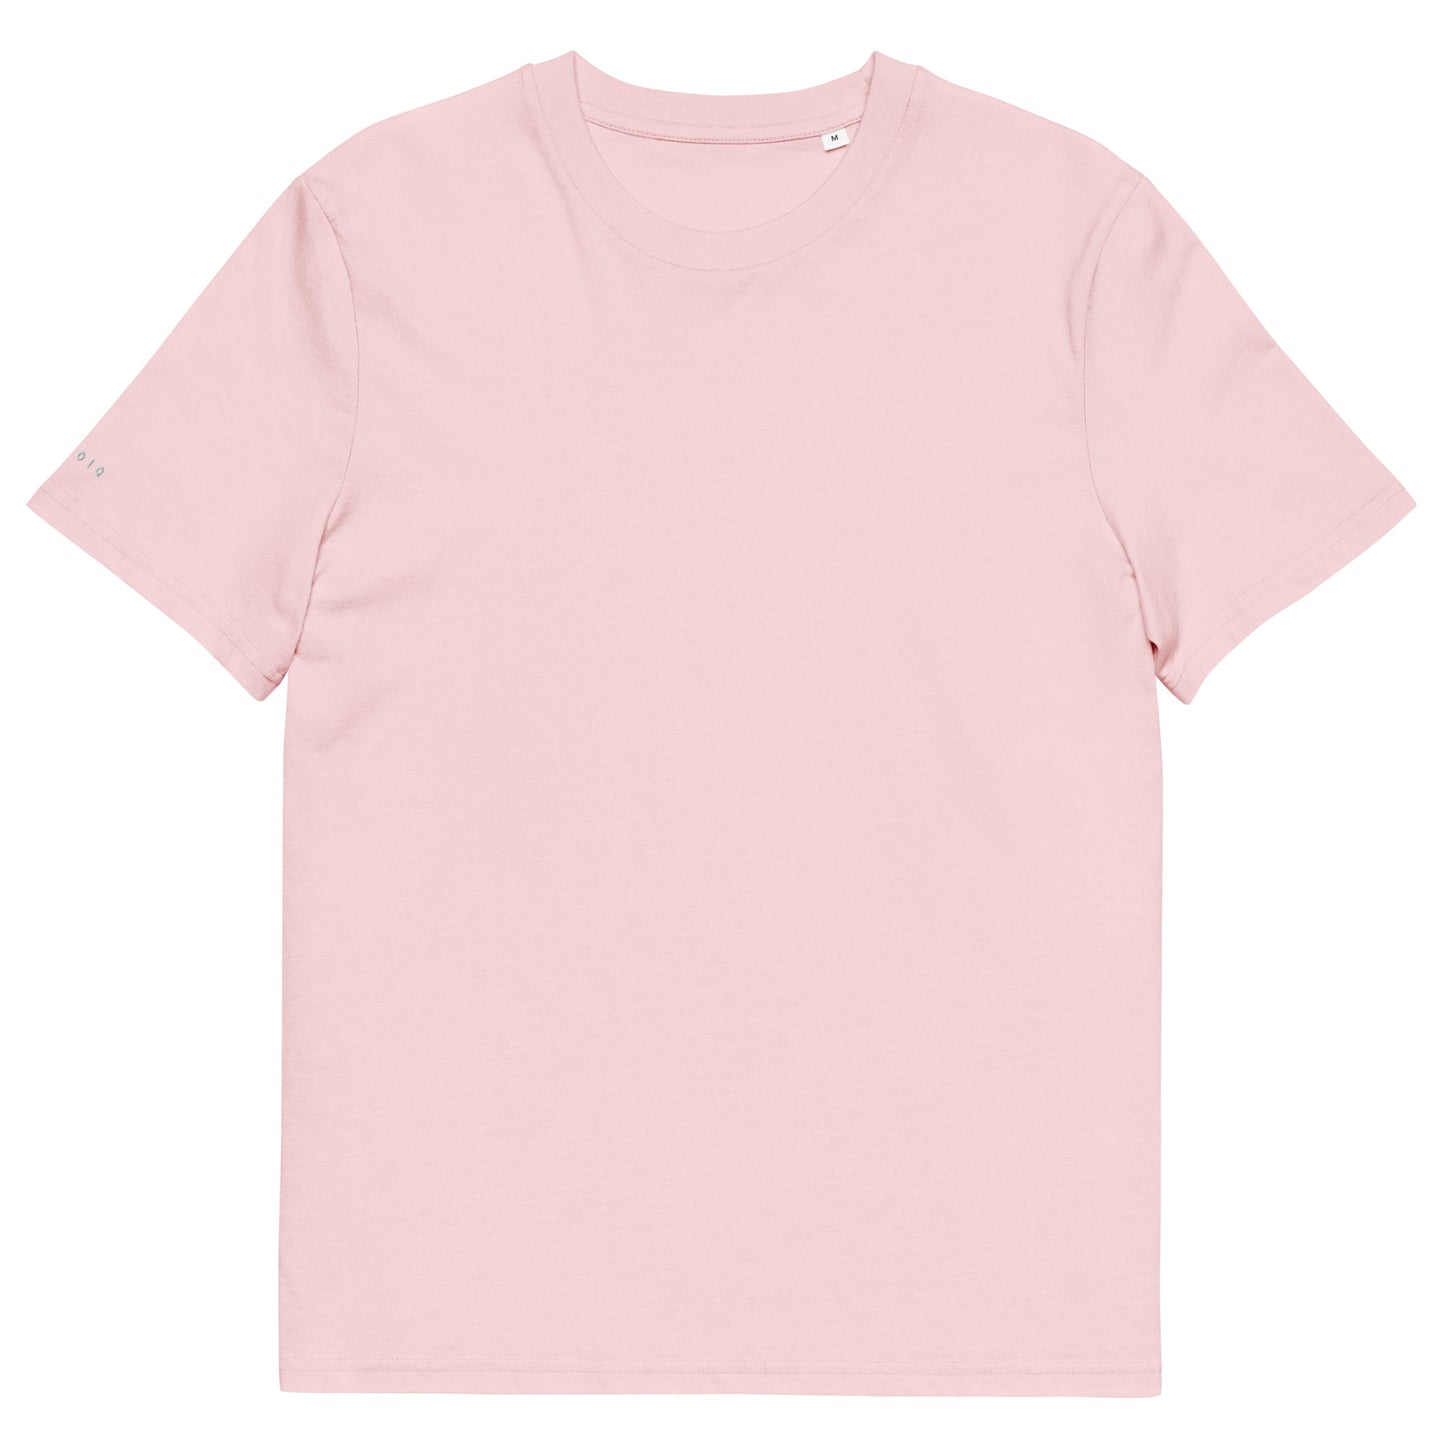 Klediq T-shirt / Cotton pink